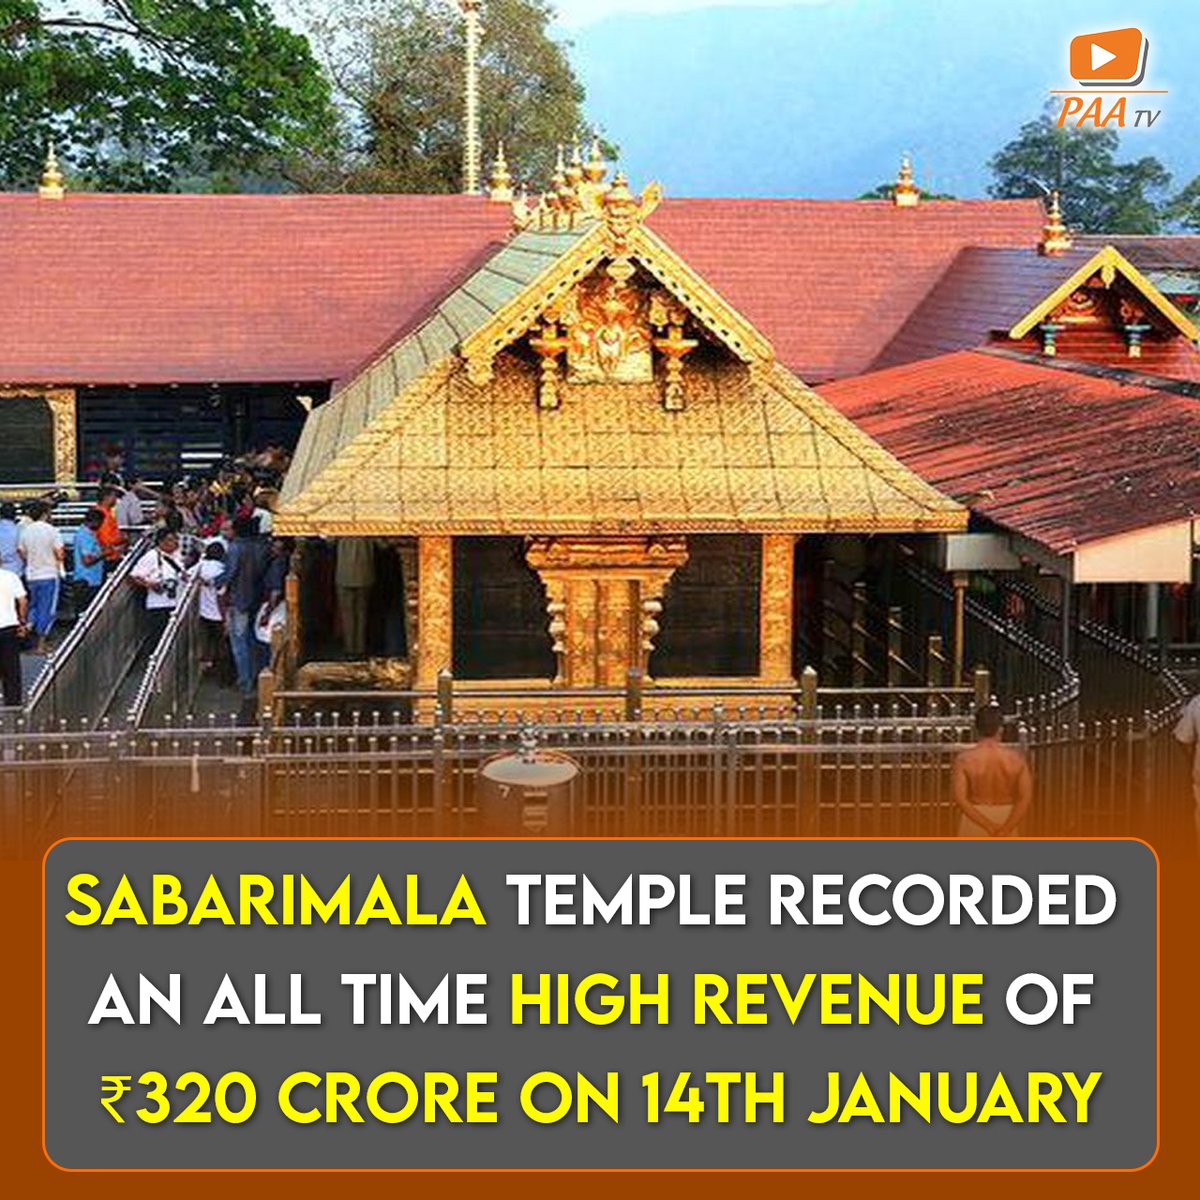 Earlier, the highest revenue was recorded in 2018 at ₹260 crore

#PaaTV #sabarimala #highrevenue #revenue #pilgrim #pilgrimage #temple #ayyappan